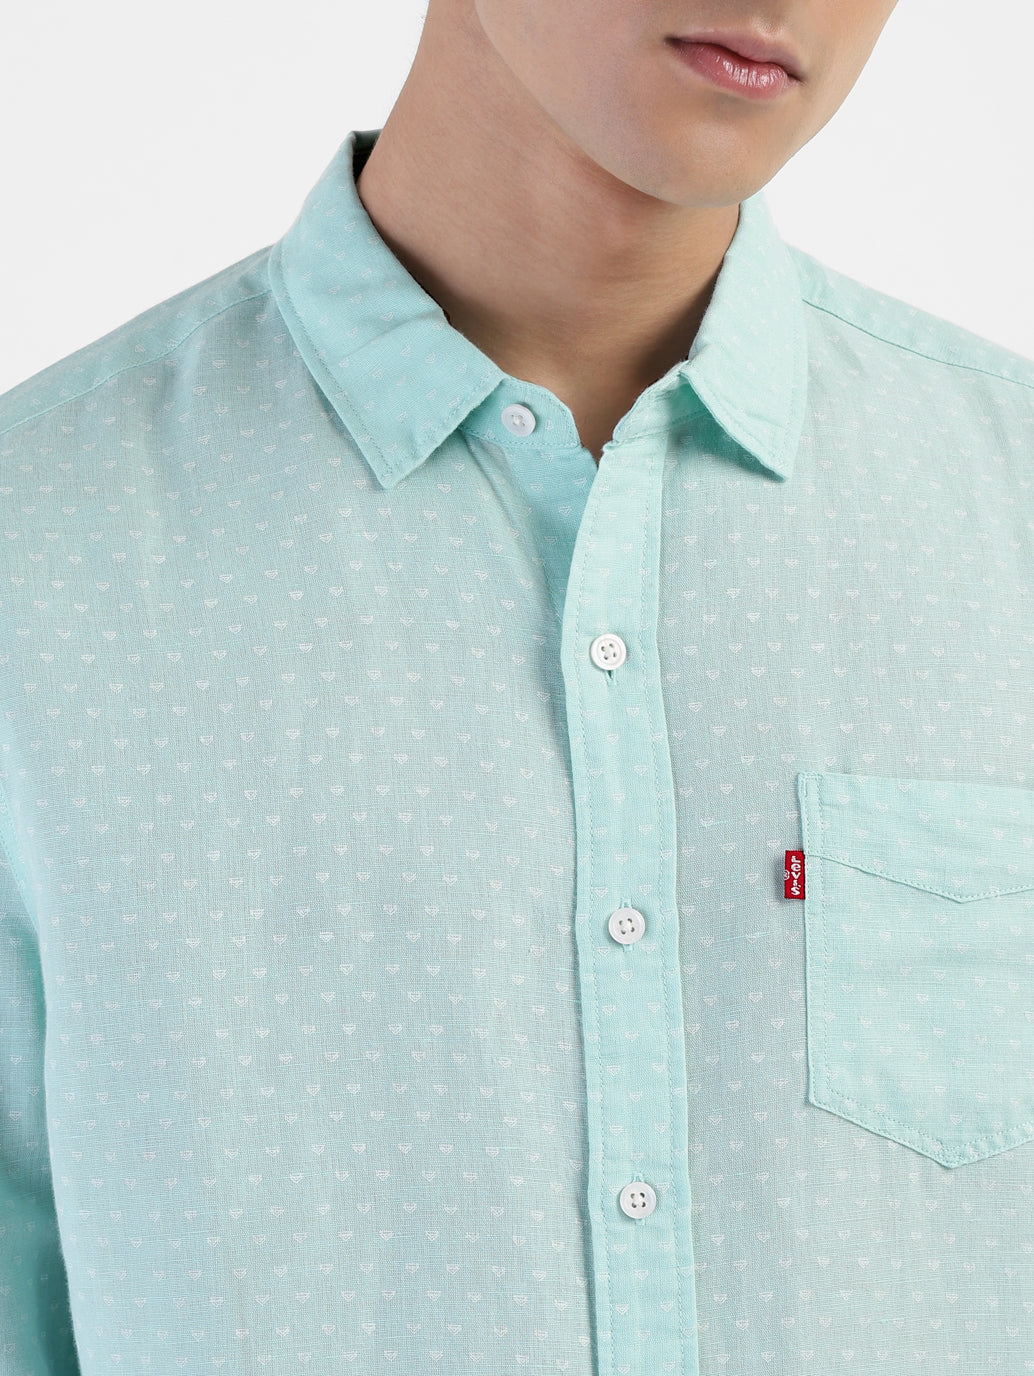 Men's Polka Dot Spread Collar Shirt